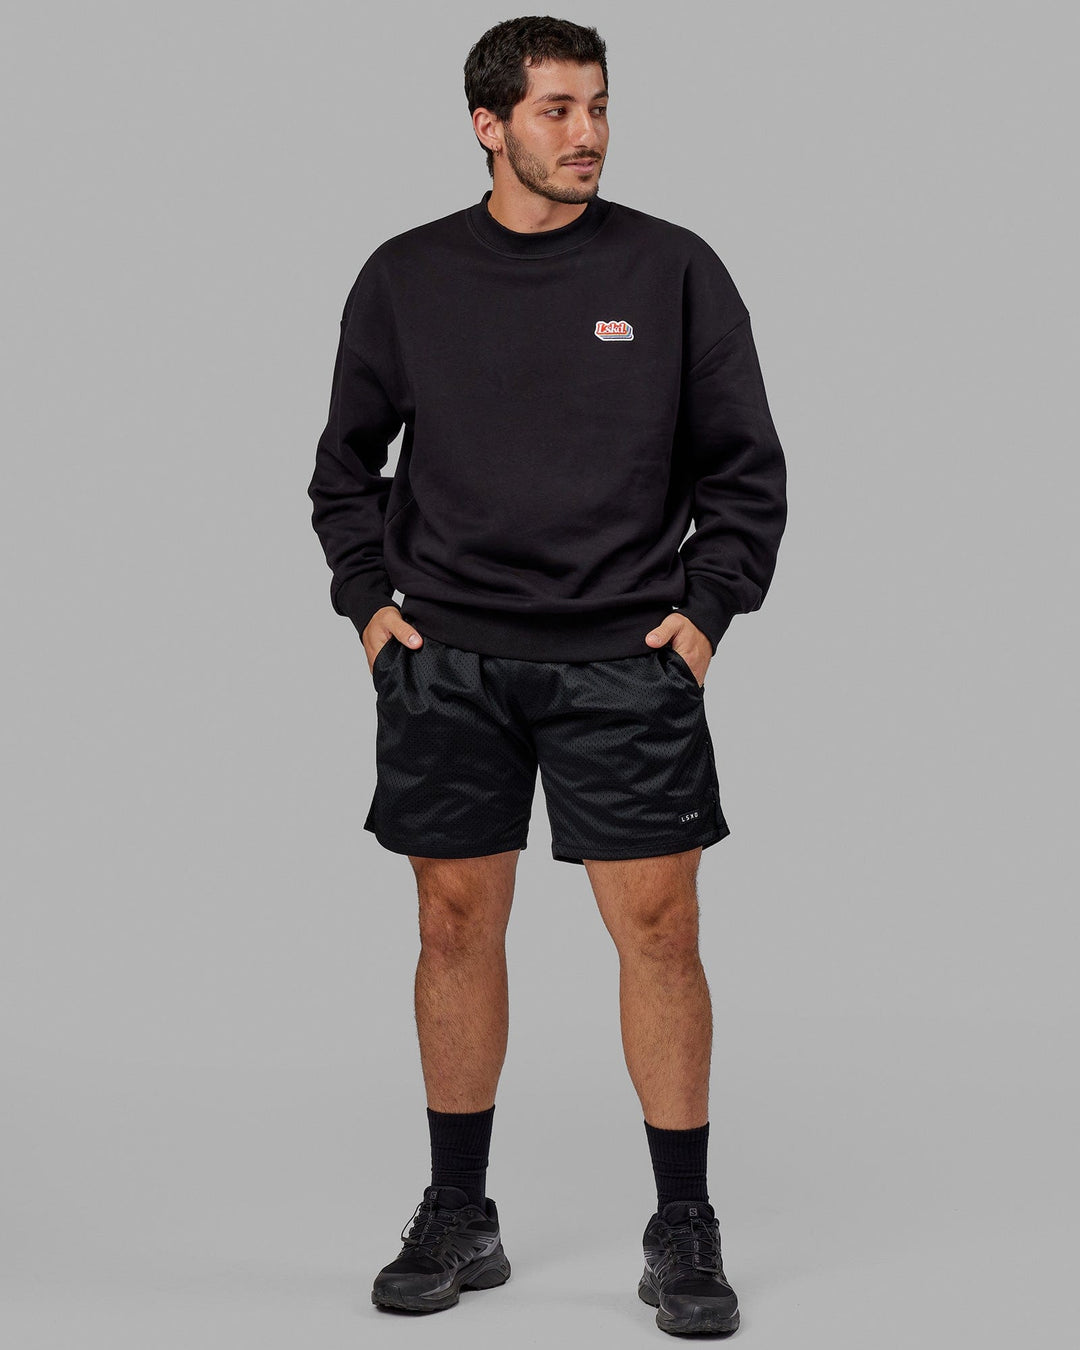 Man wearing Unisex Radiate Sweater Oversize - Black